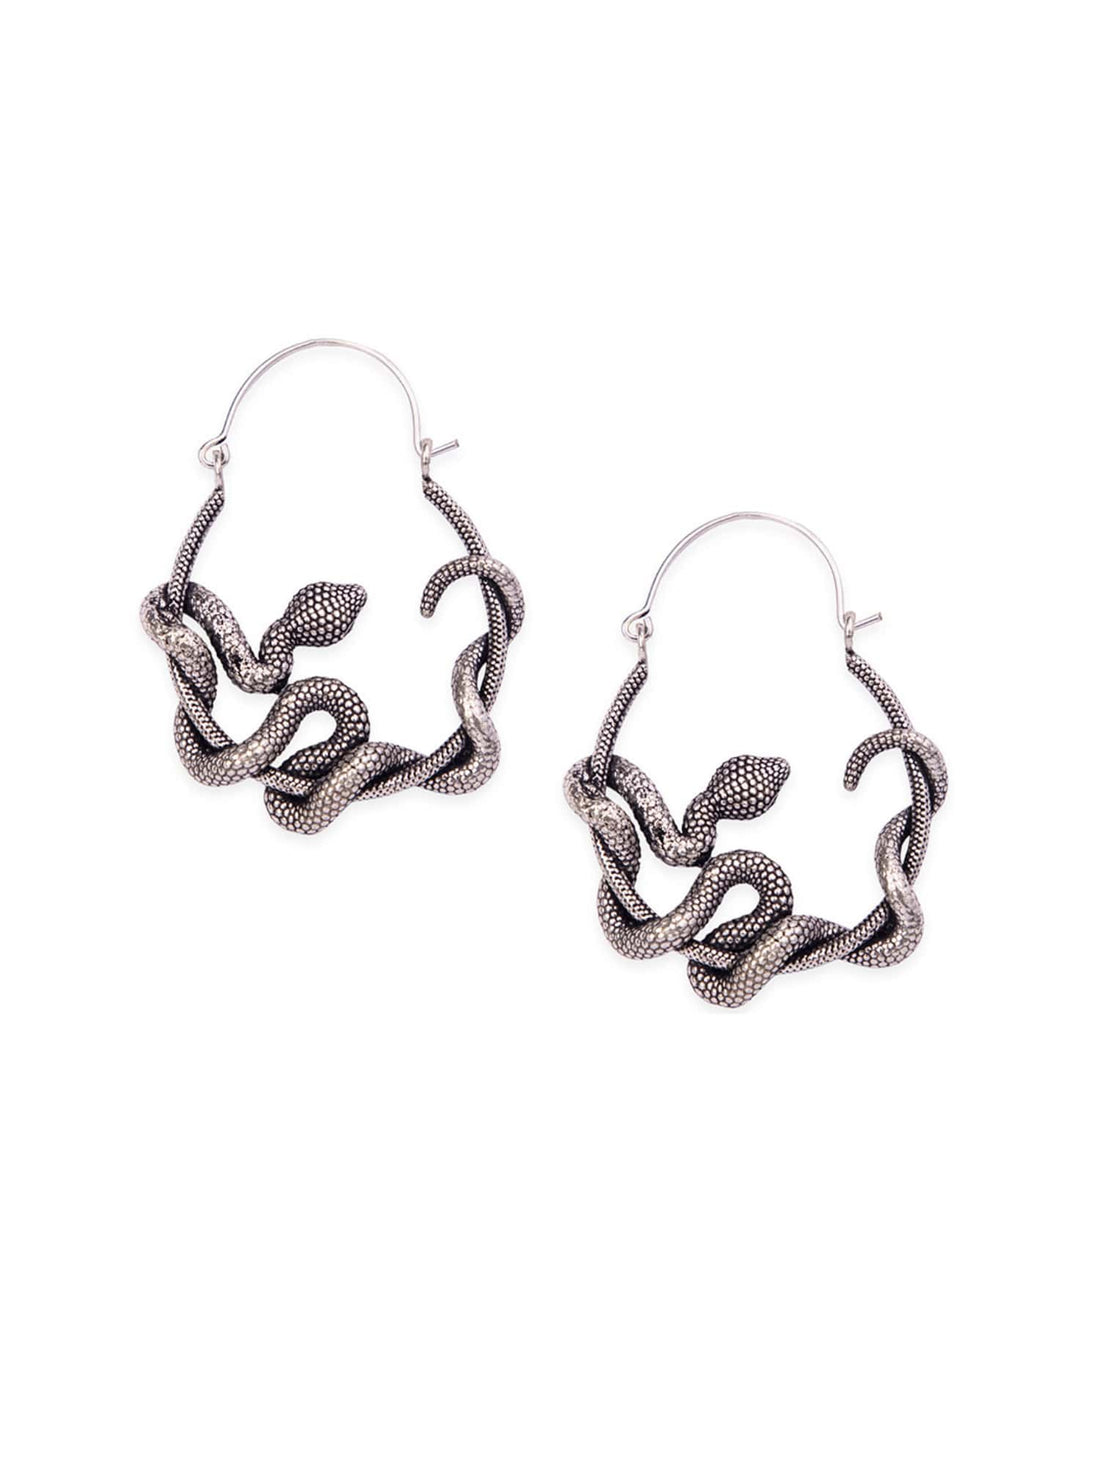 Party Wear Hoops Earrings - Elegant Serpents Gold and Silver-Plated Brass Earrings By Studio One Love